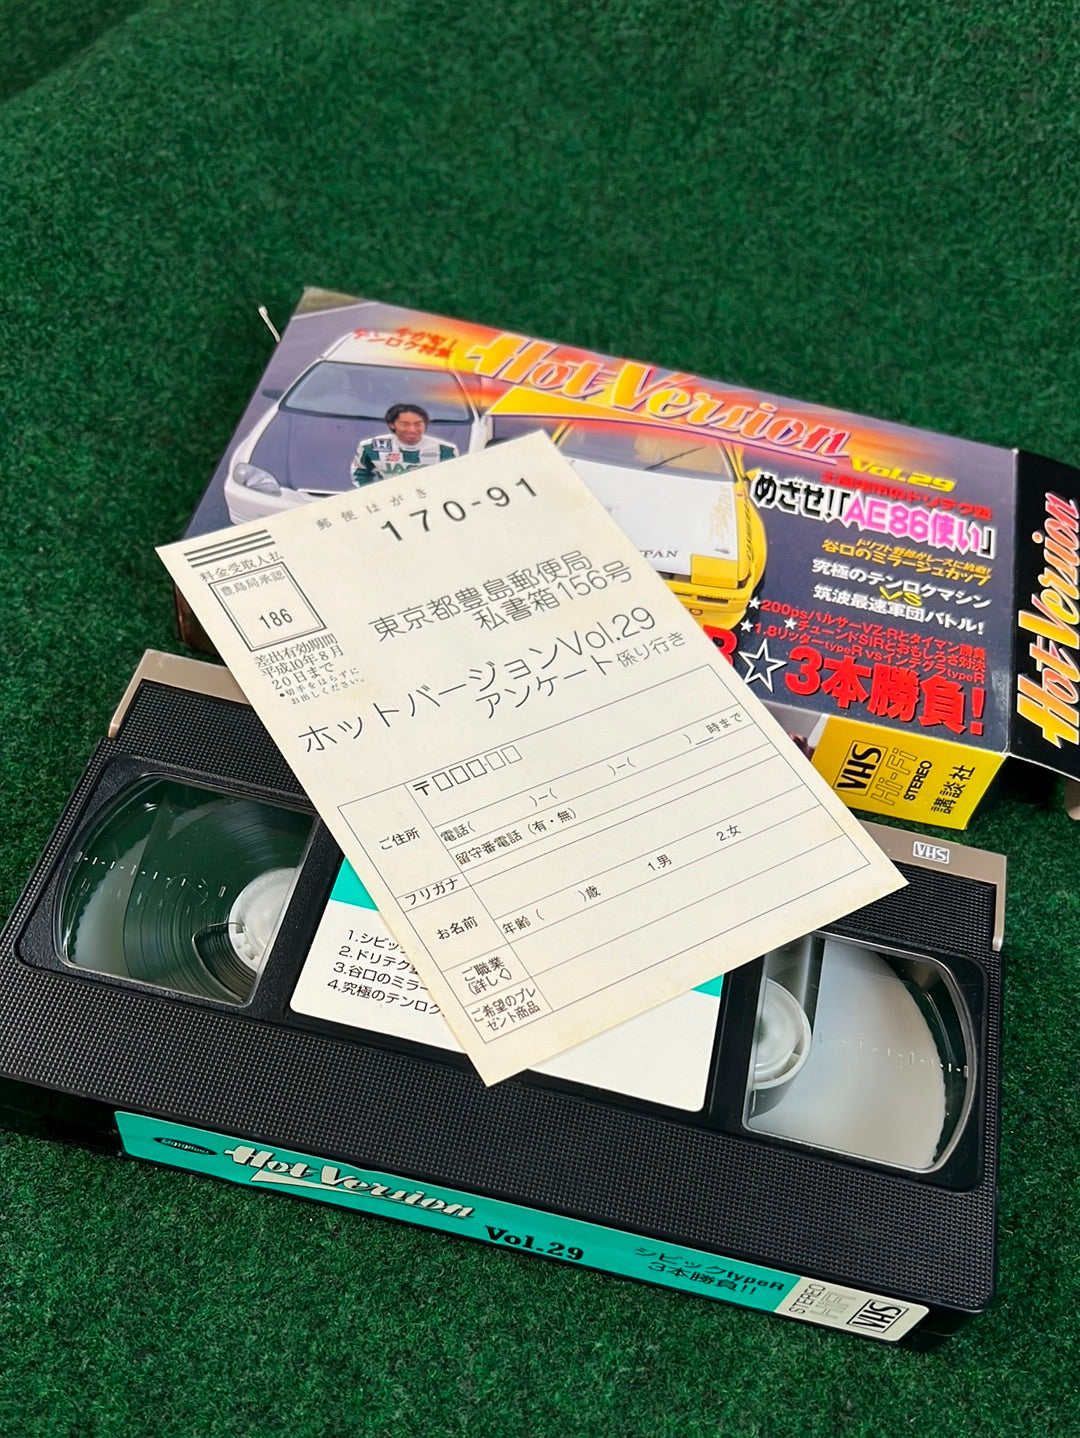 Hot Version VHS - Vol. 29